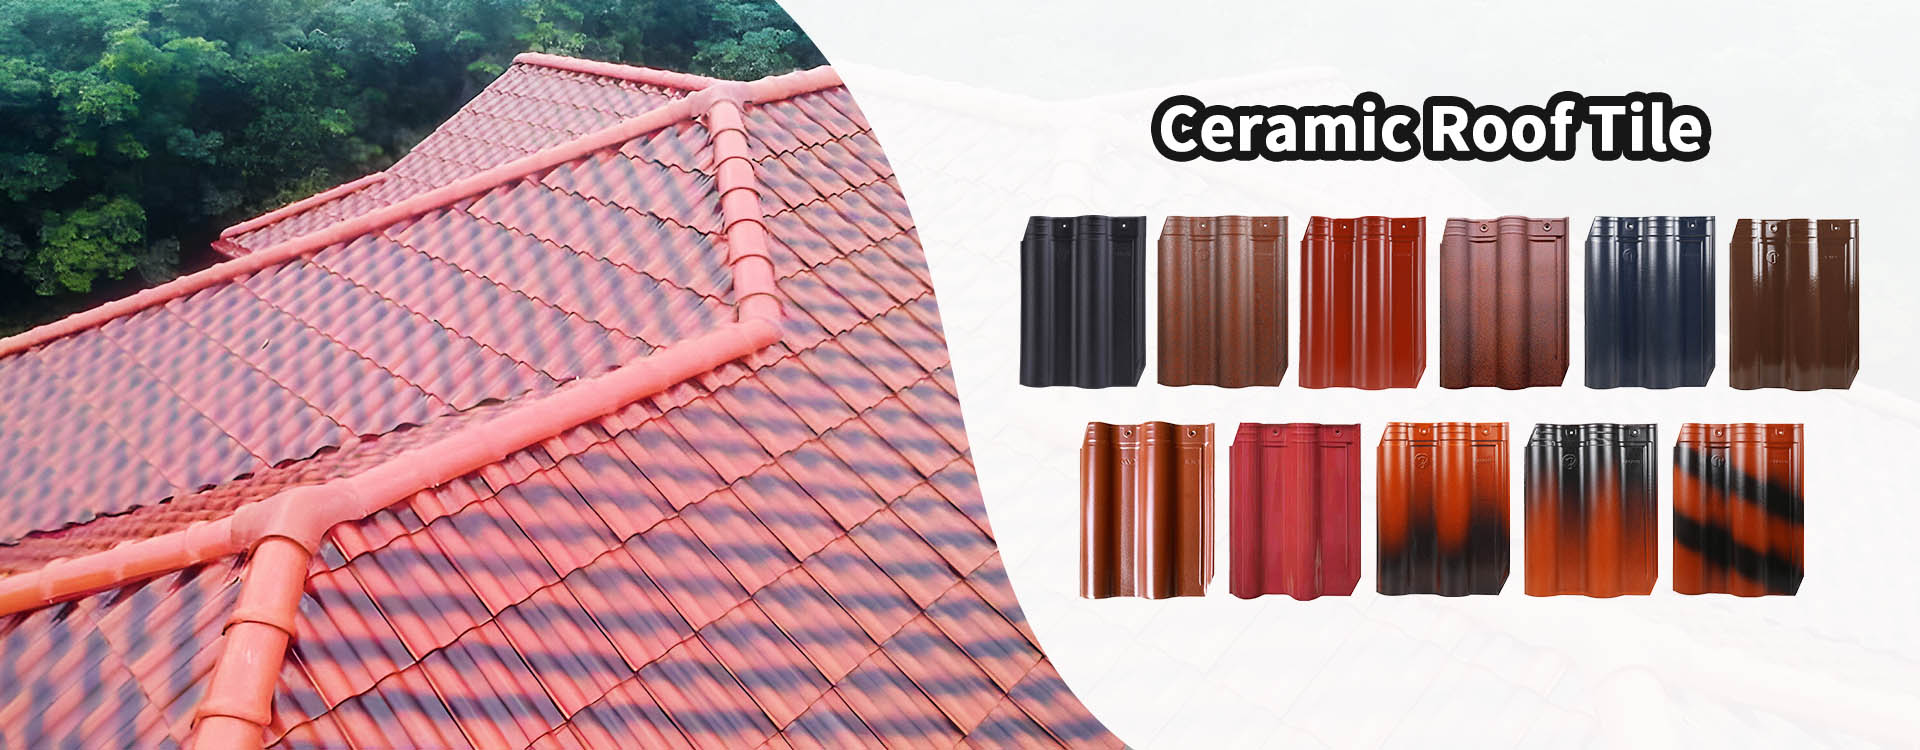 China Ceramic Roof Tile